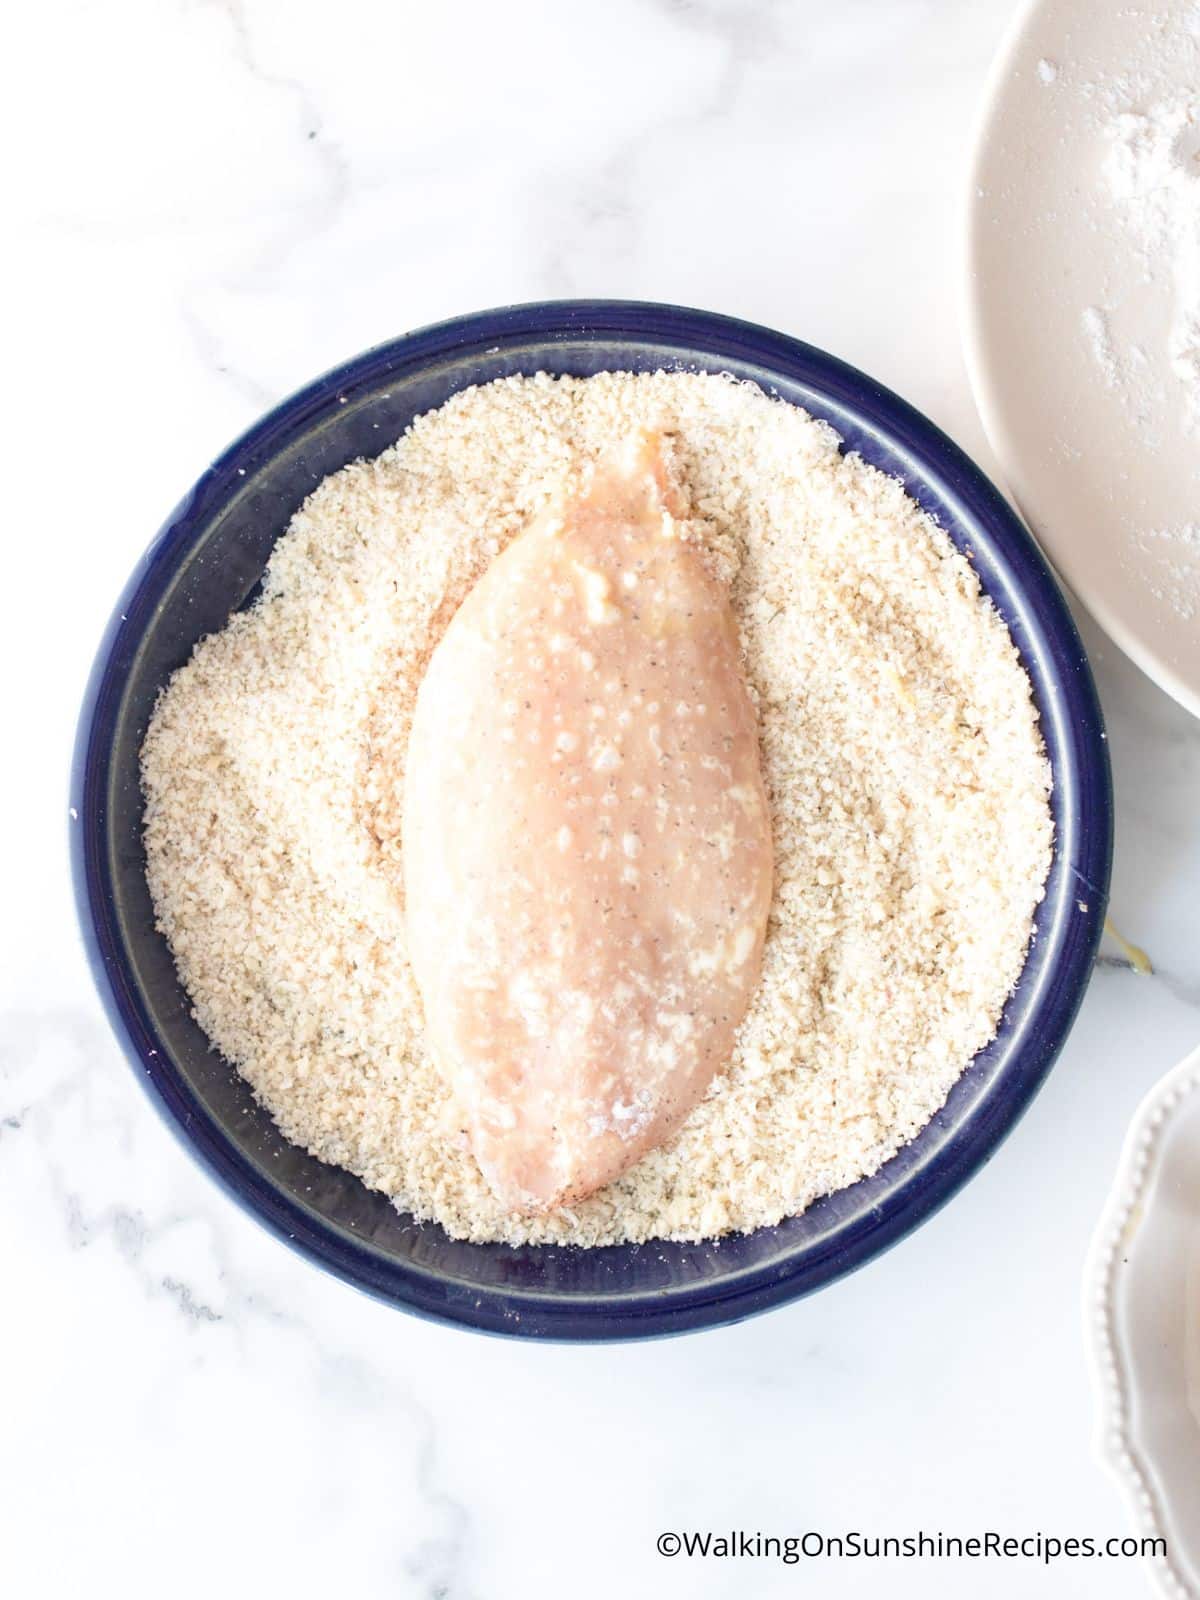 Add chicken cutlet to pank breadcrumbs.